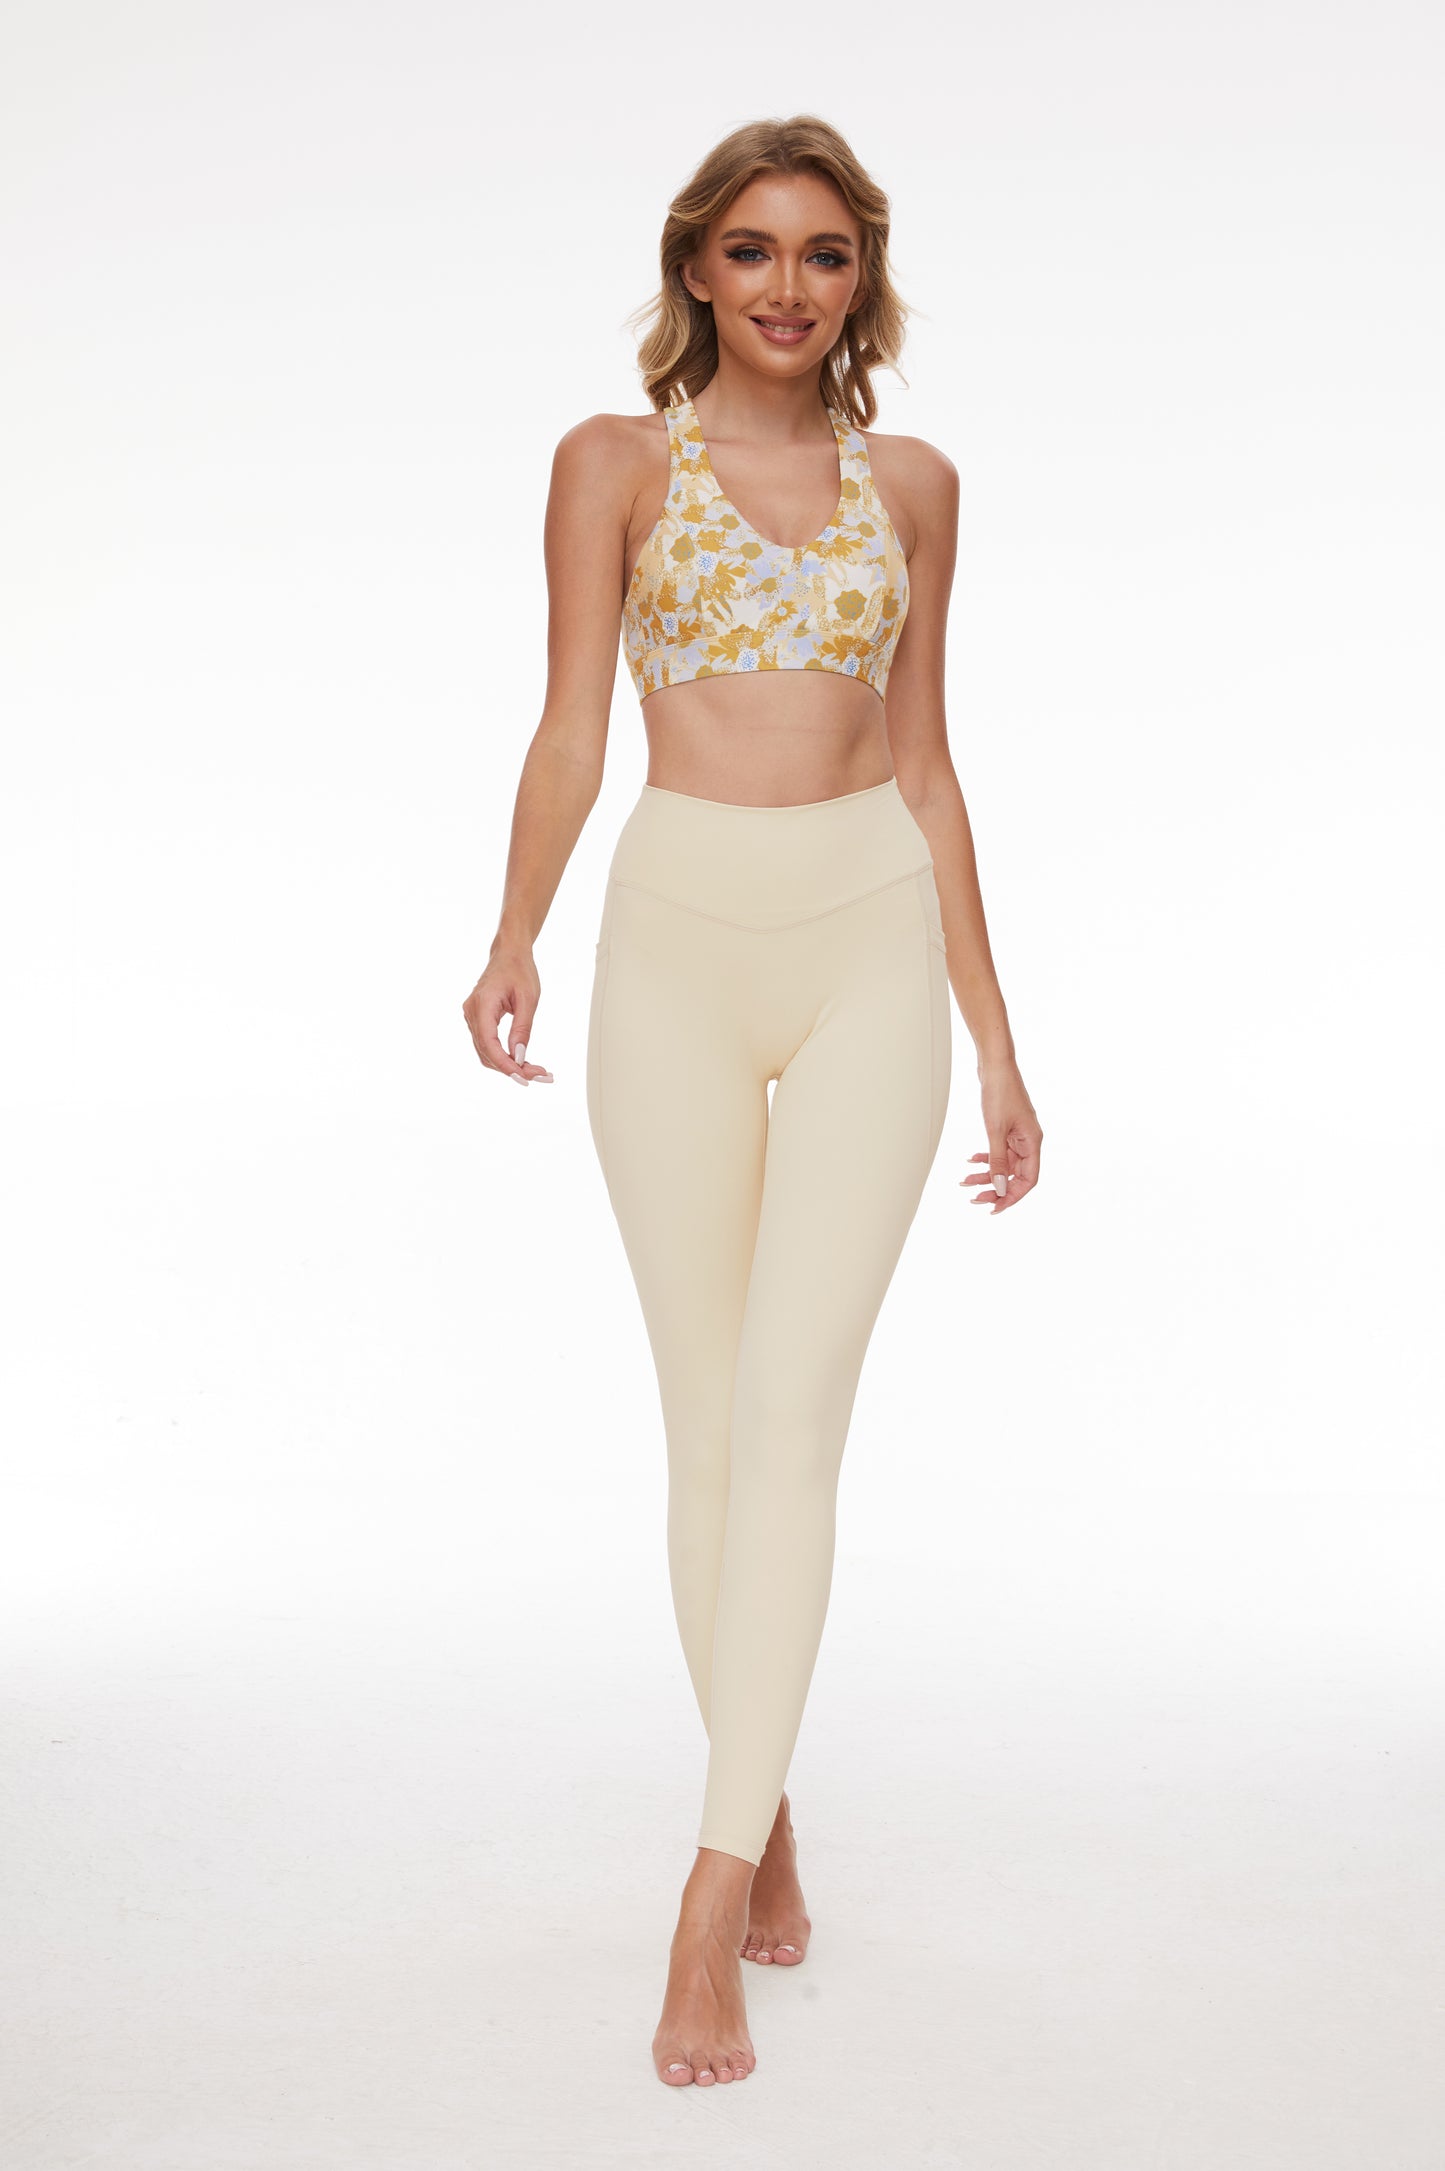 ButterySoft High-waisted leggings- Ivory White